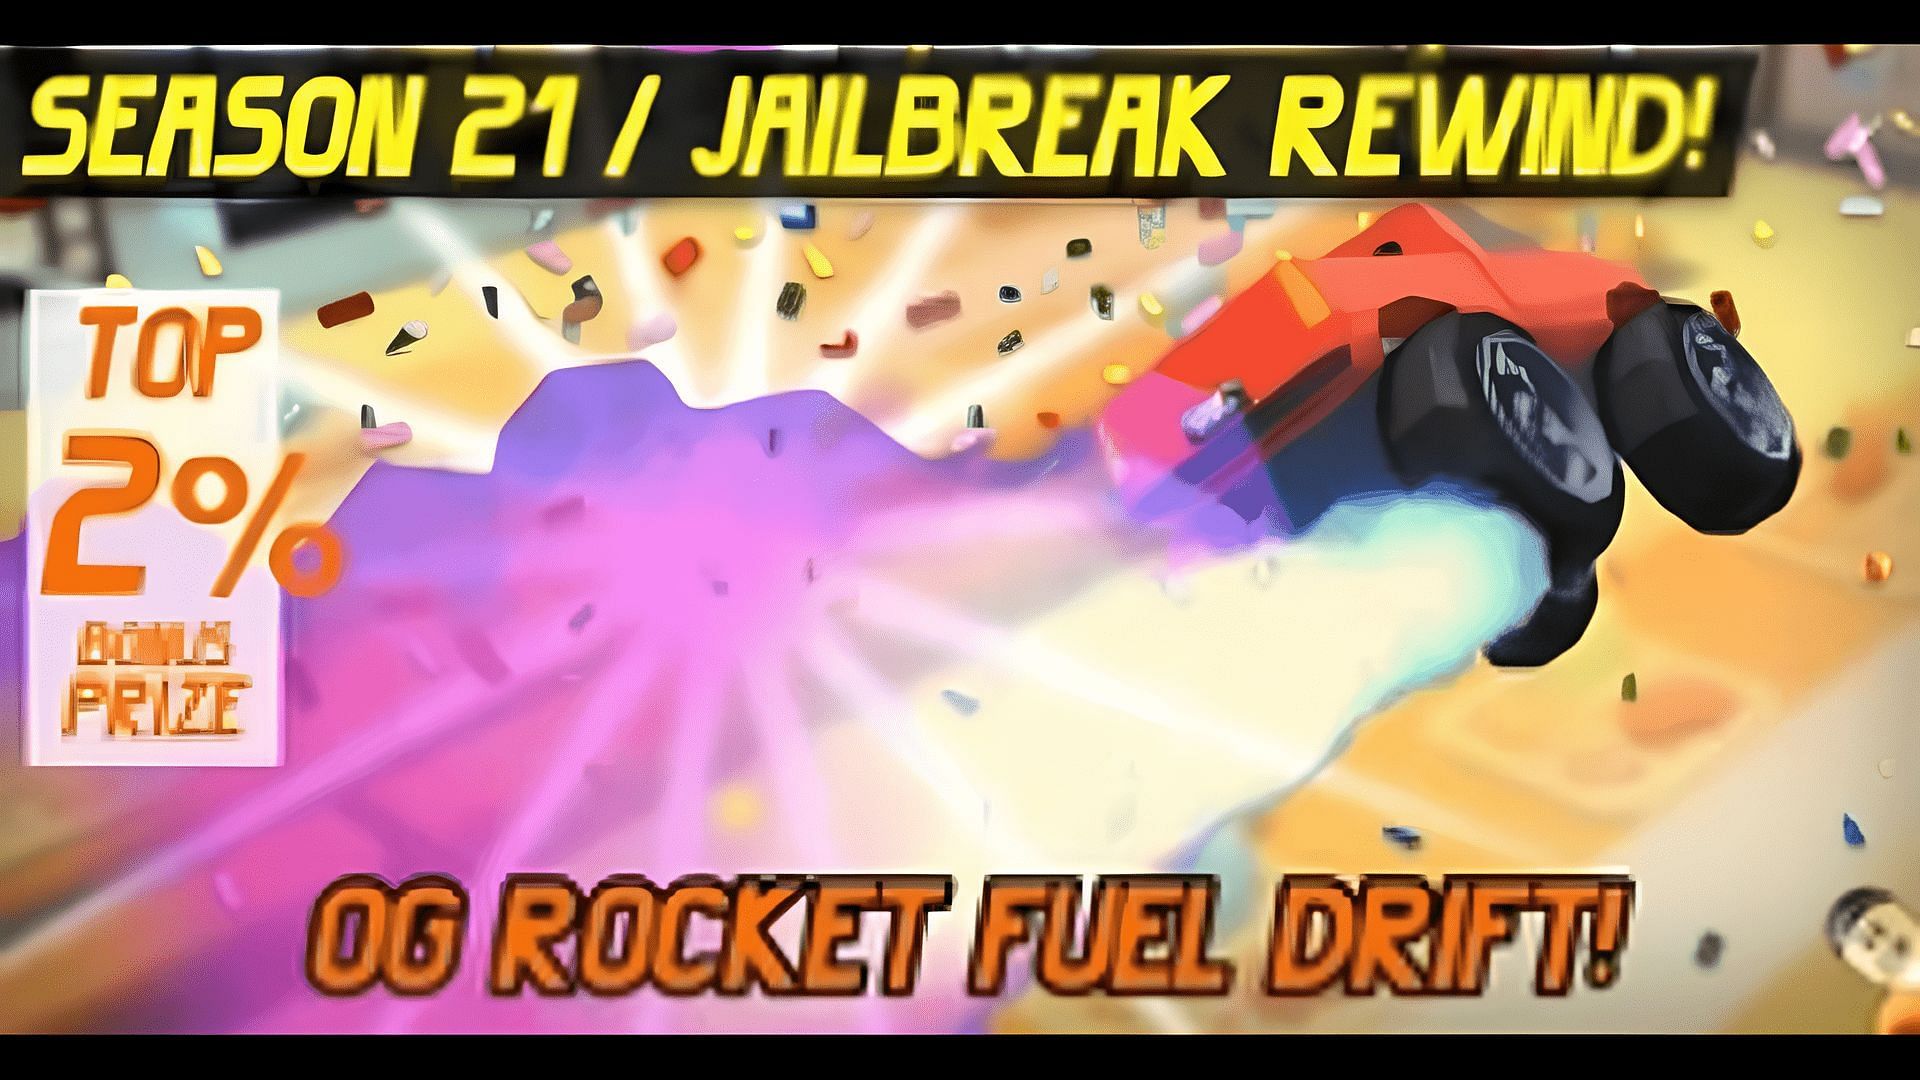 Jailbreak Season 21: Rewind Top 2% free reward (Image via Roblox)